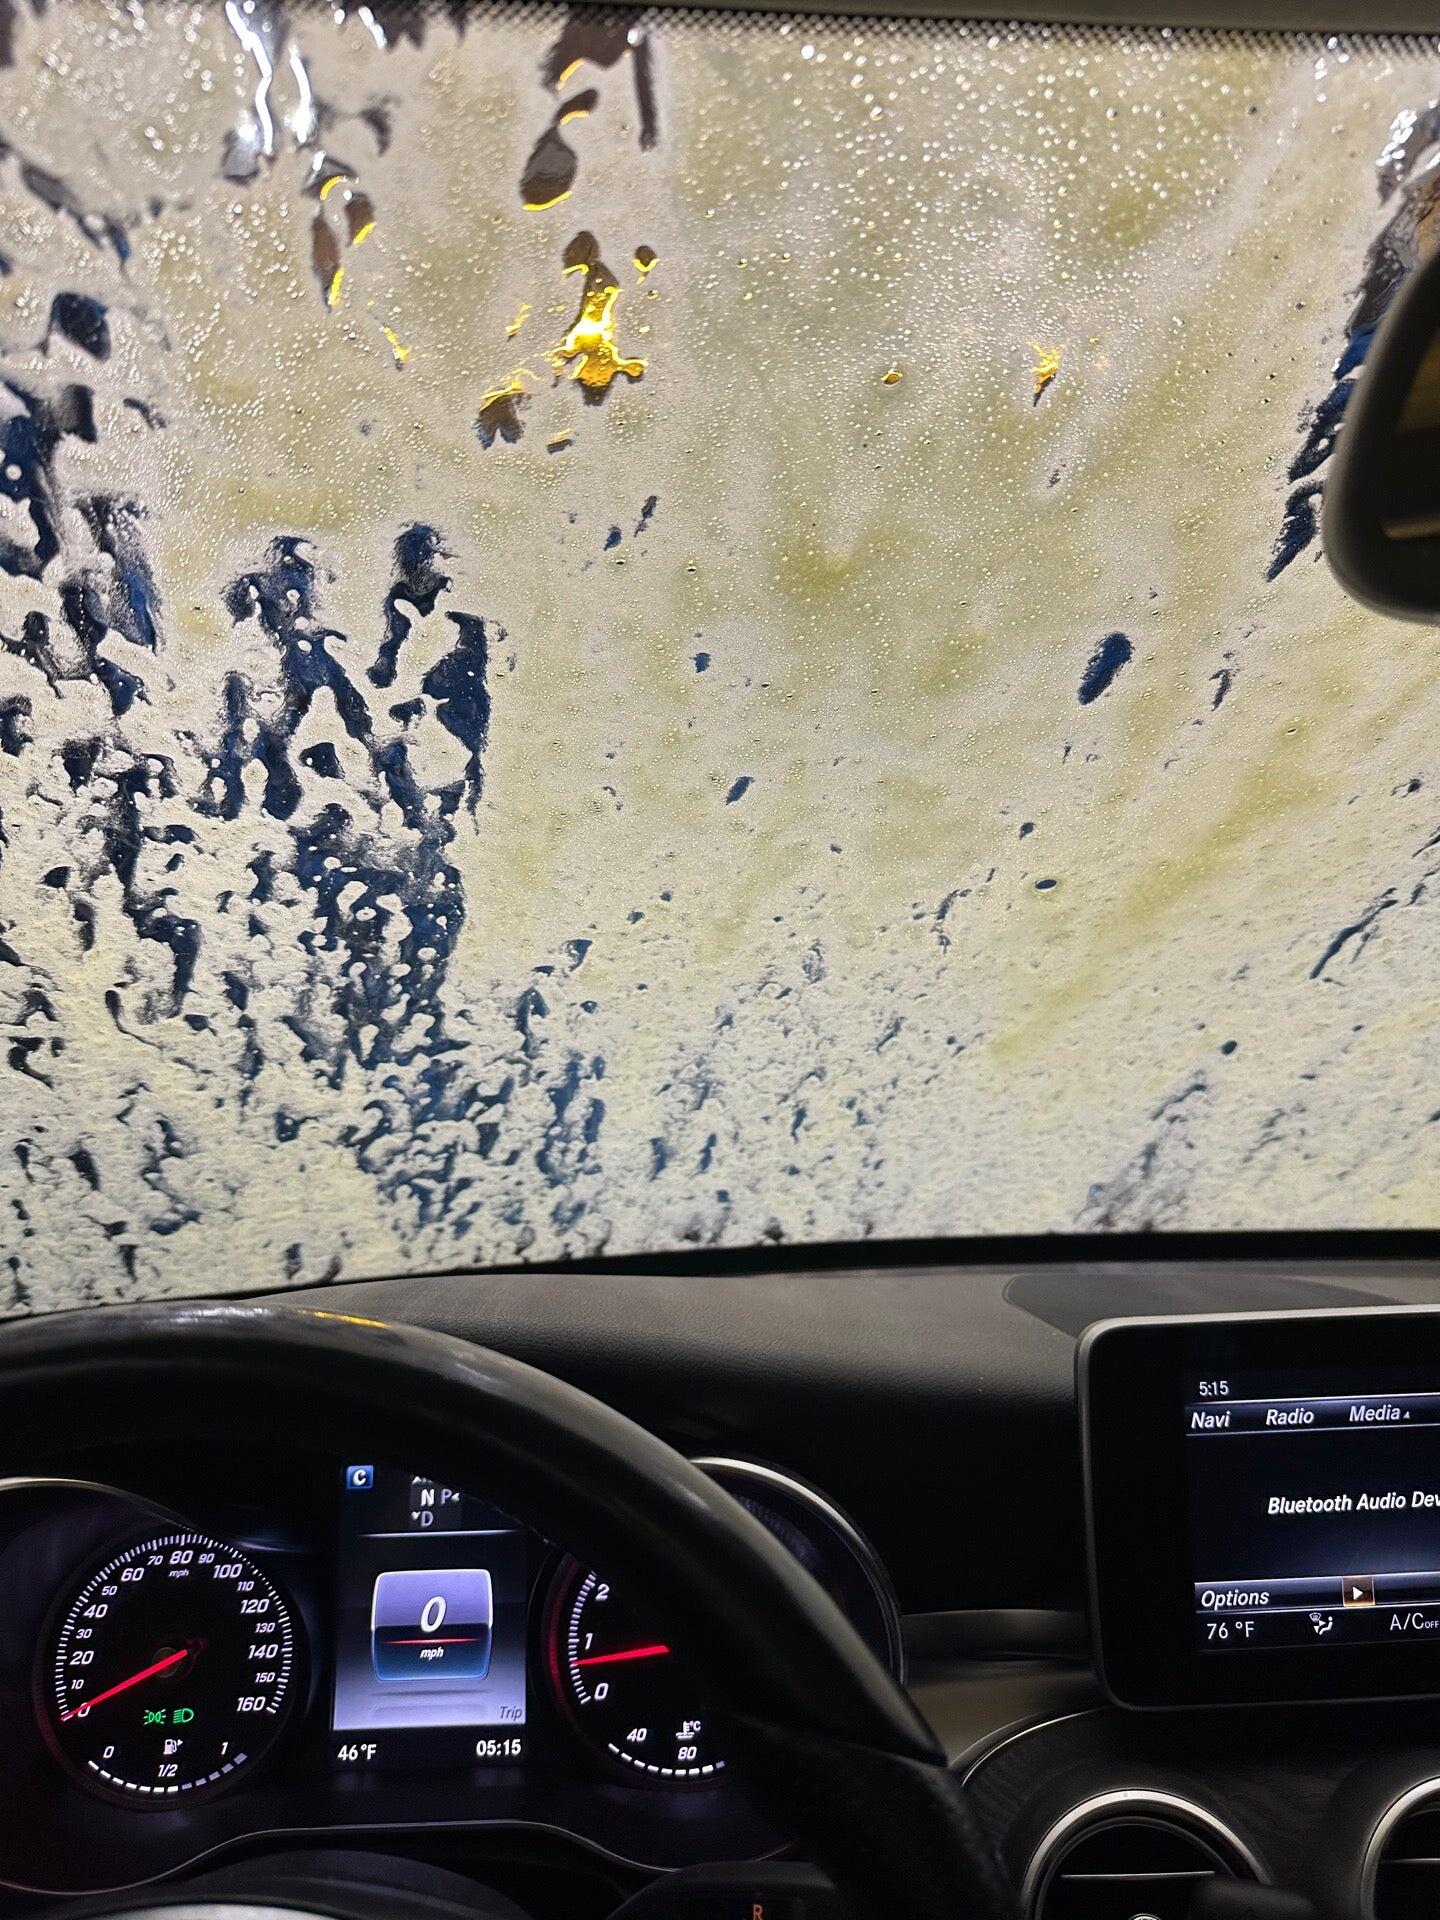 Kaady Car Washes